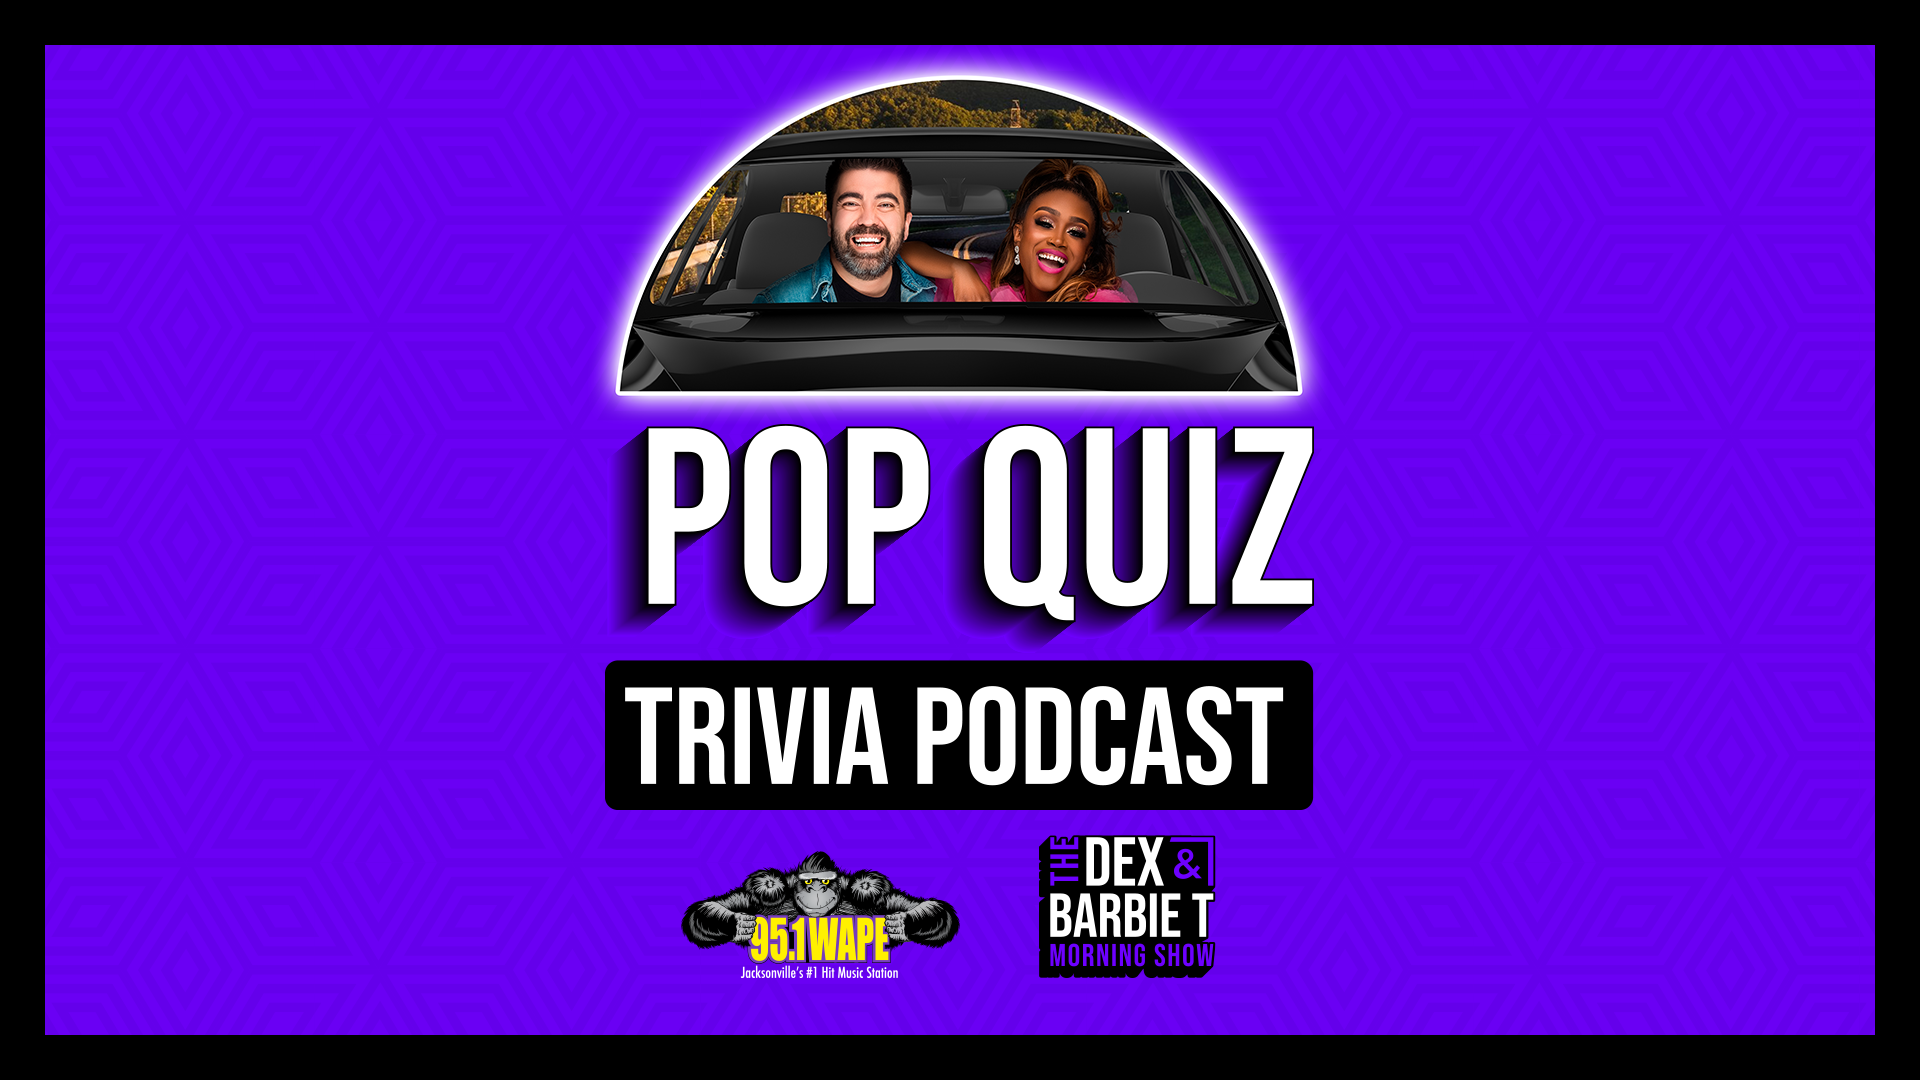 The Dex & Barbie T Pop Quiz Trivia Podcast